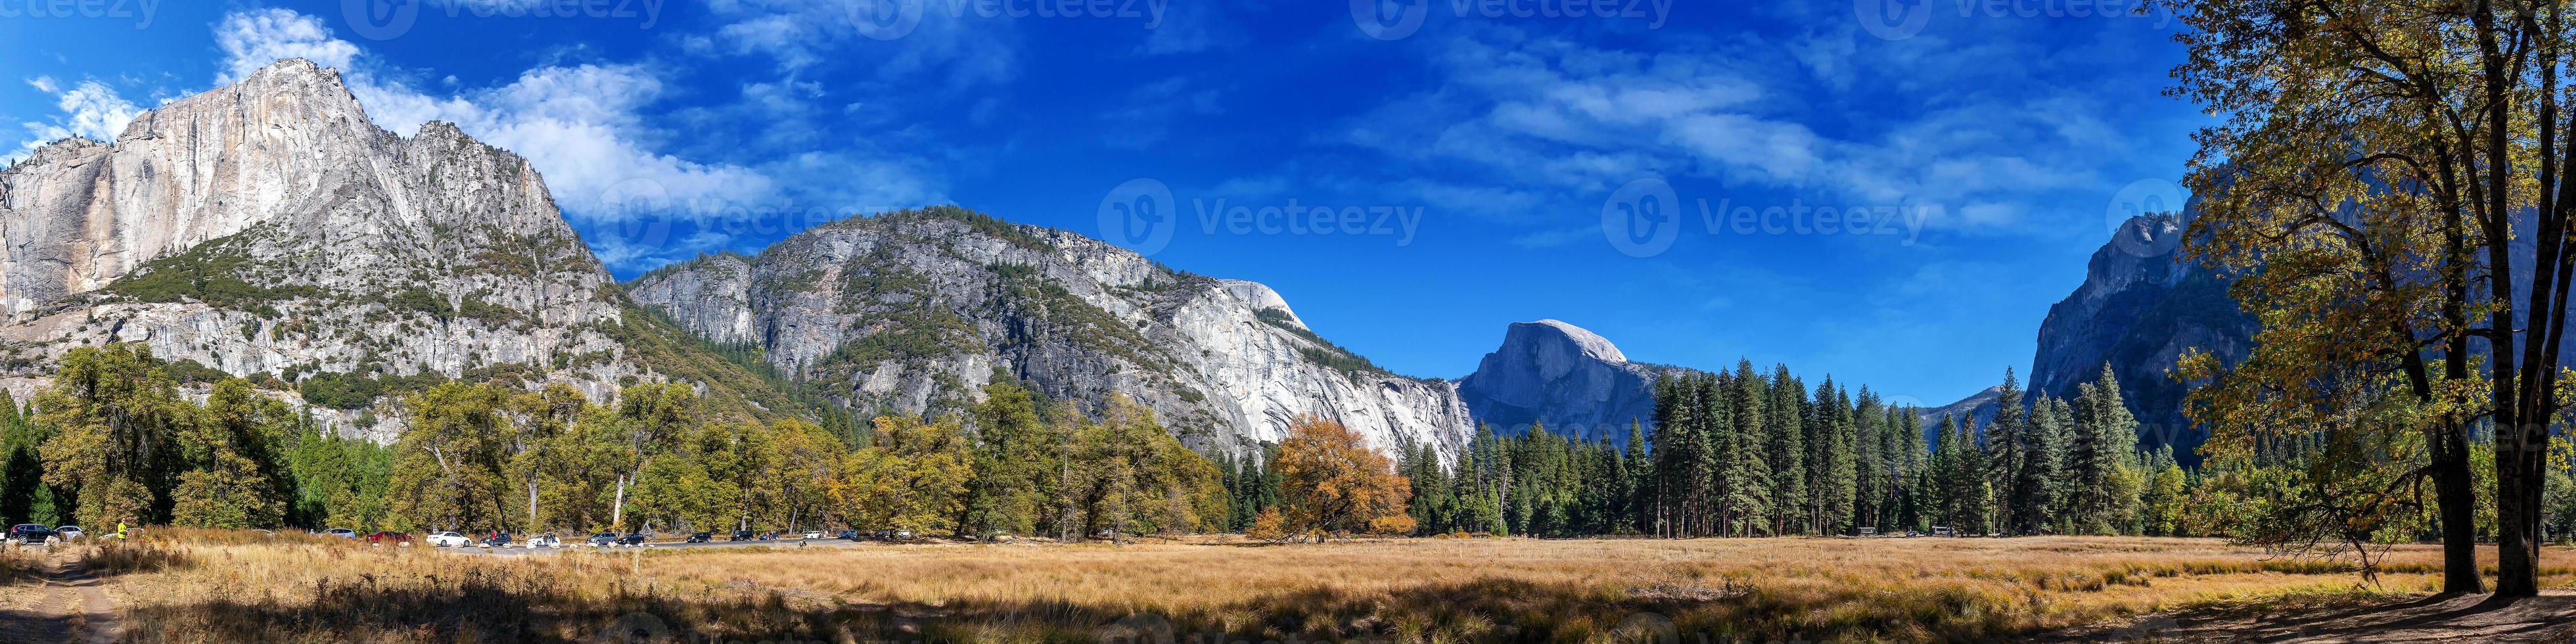 panoramautsikt över Yosemite National Park i en solig dag. foto